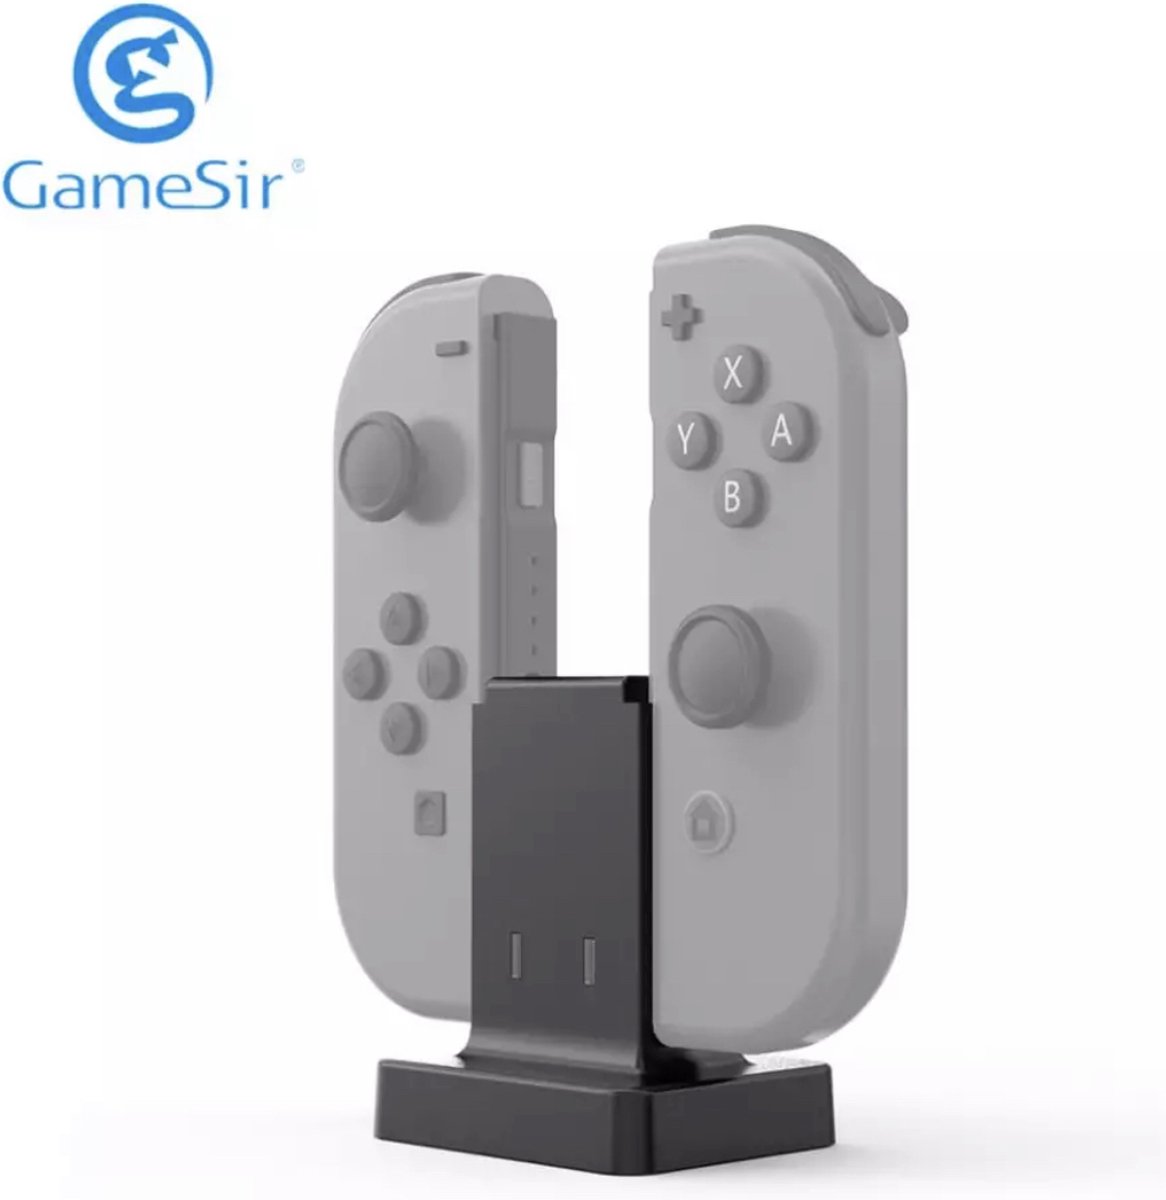 Laadstation voor Nintendo Switch - Dubbel Joy-Con Controllers